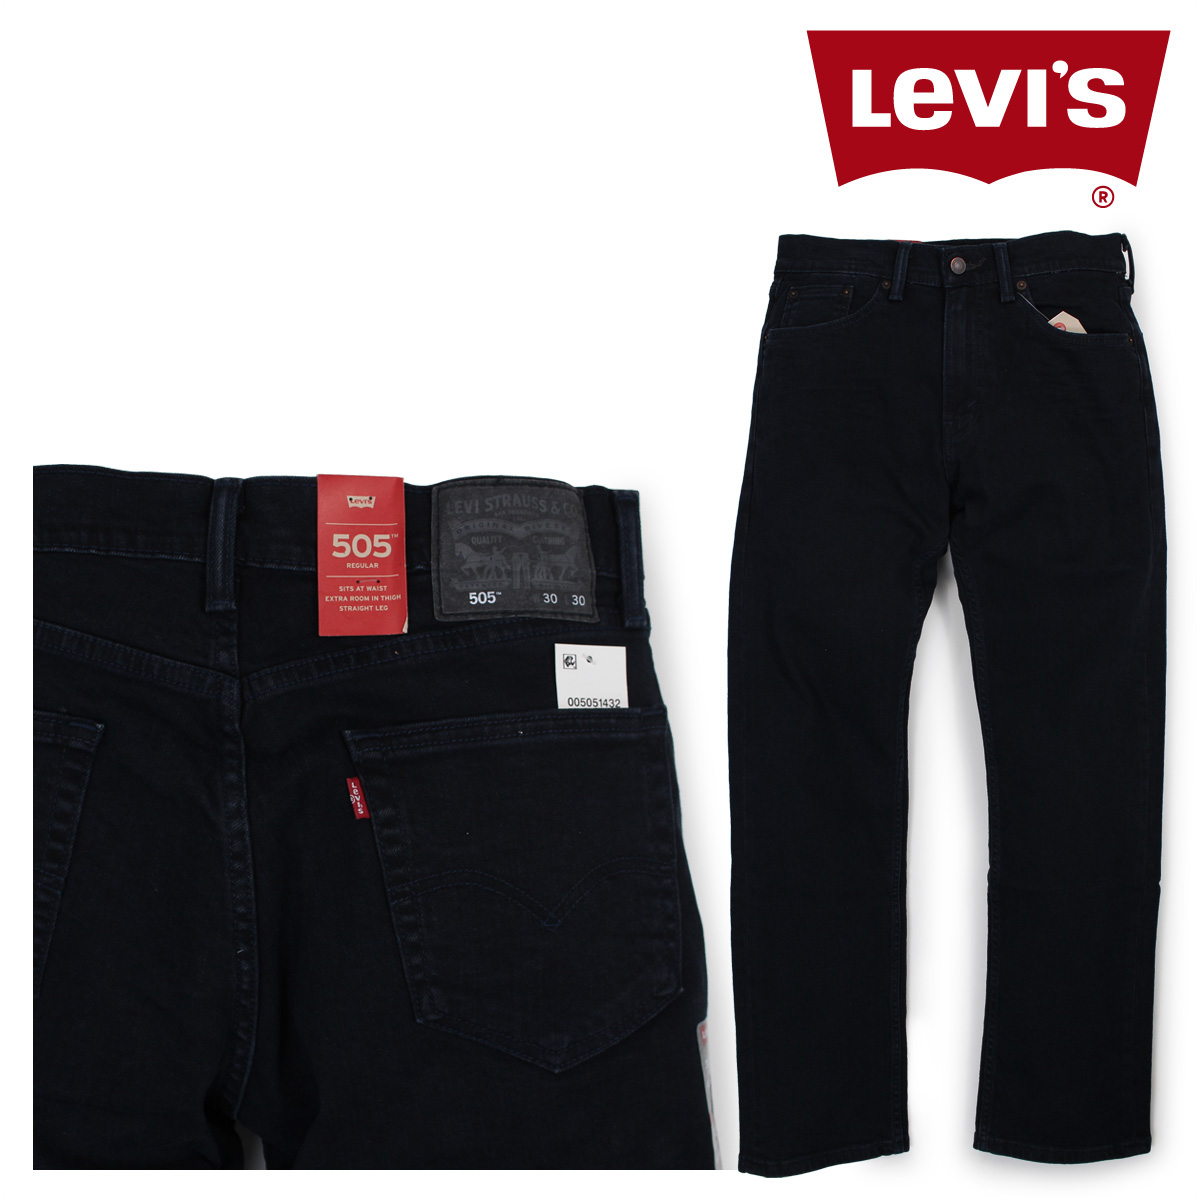 levis 505 stretch black